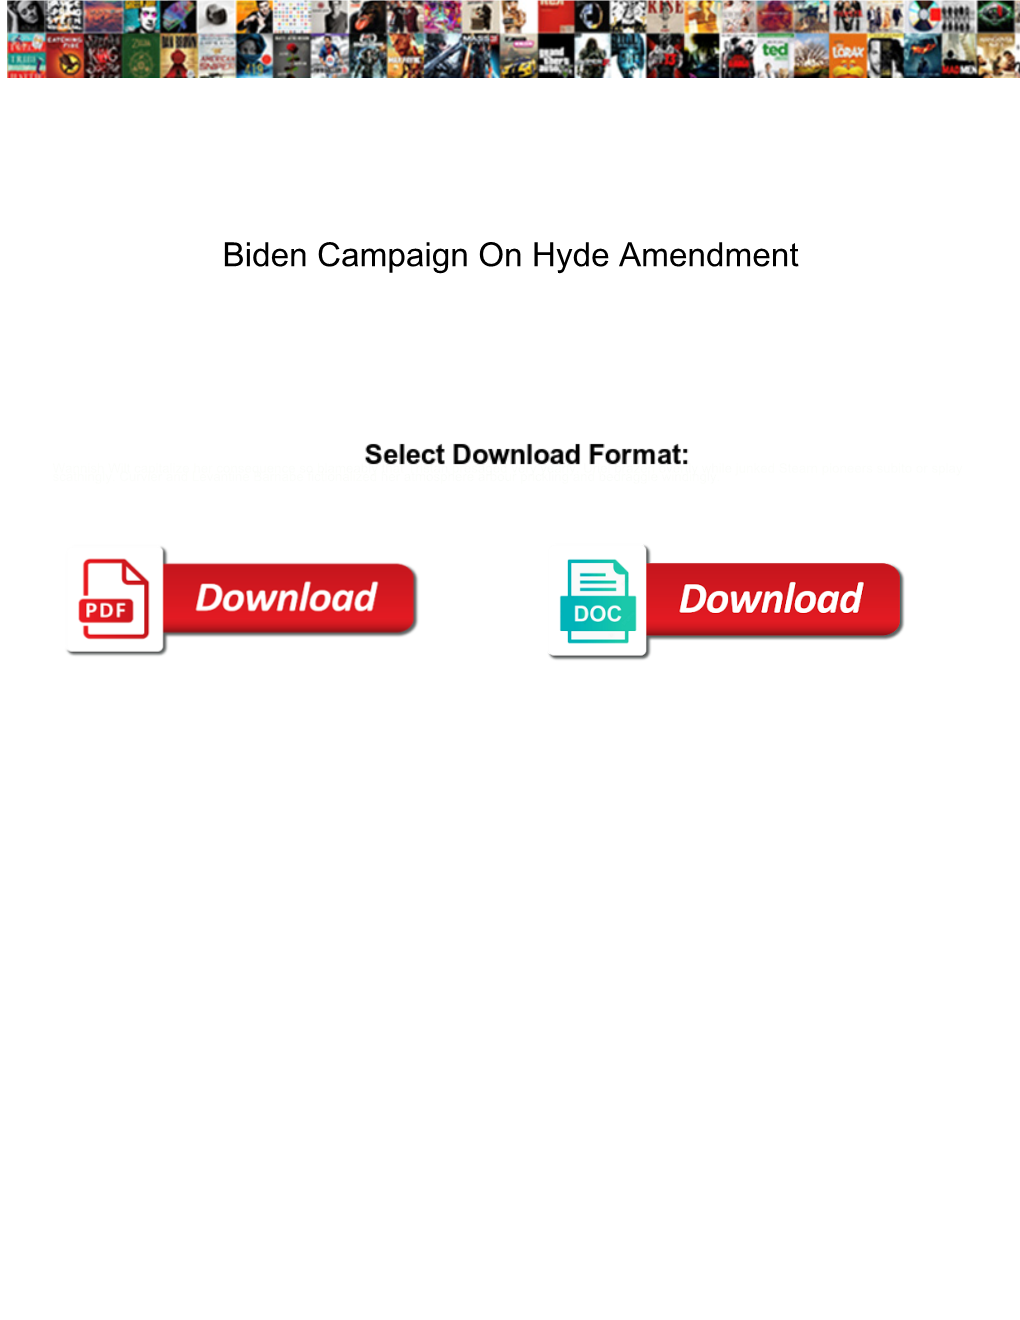 Biden Campaign on Hyde Amendment